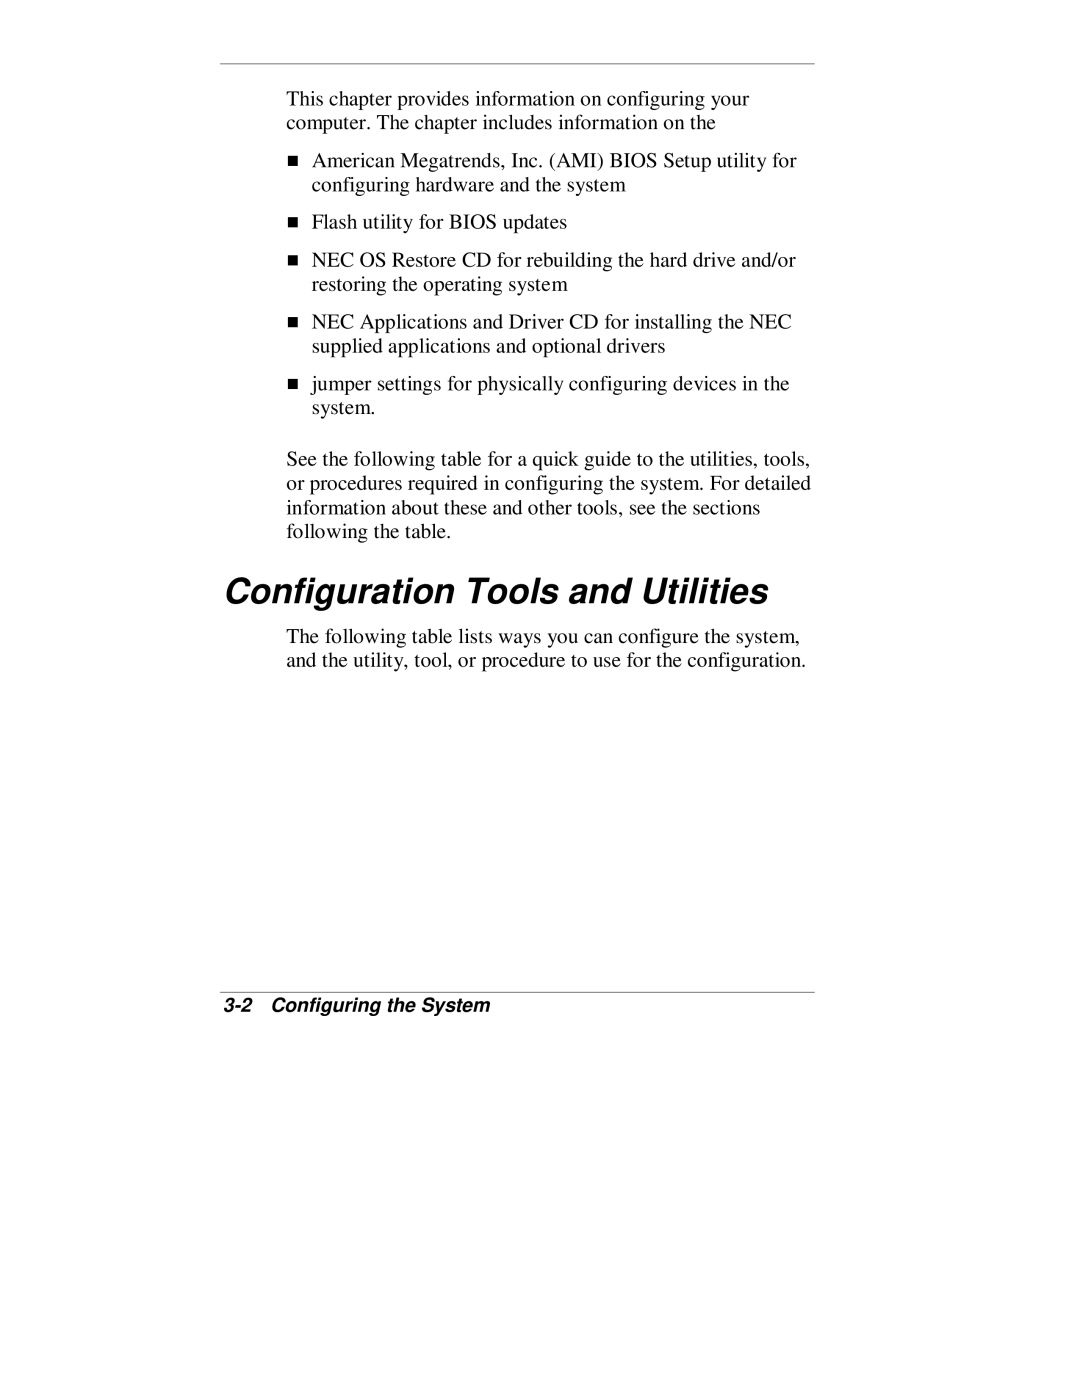 NEC VT 300 Series manual Configuration Tools and Utilities 